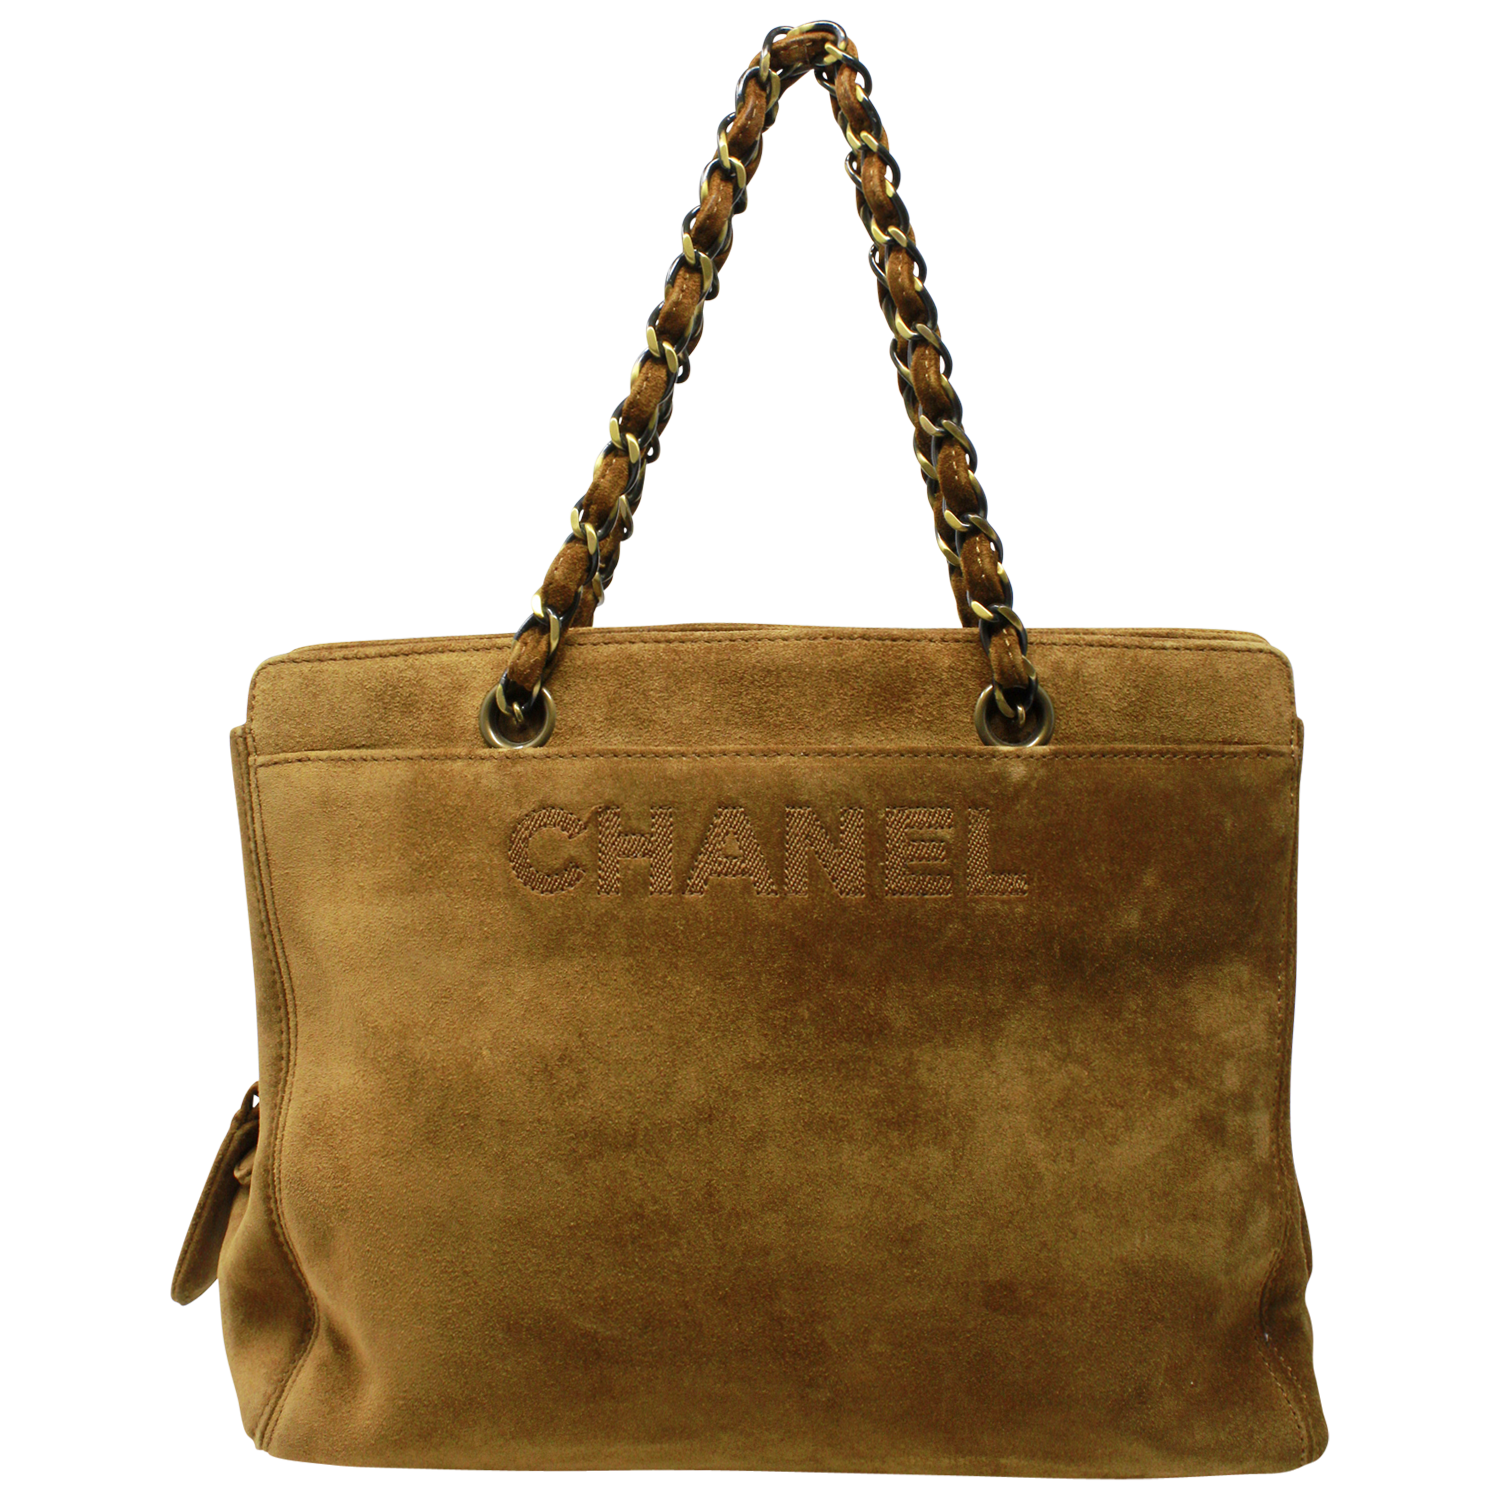 Chanel Caramel Suede Logo Bag